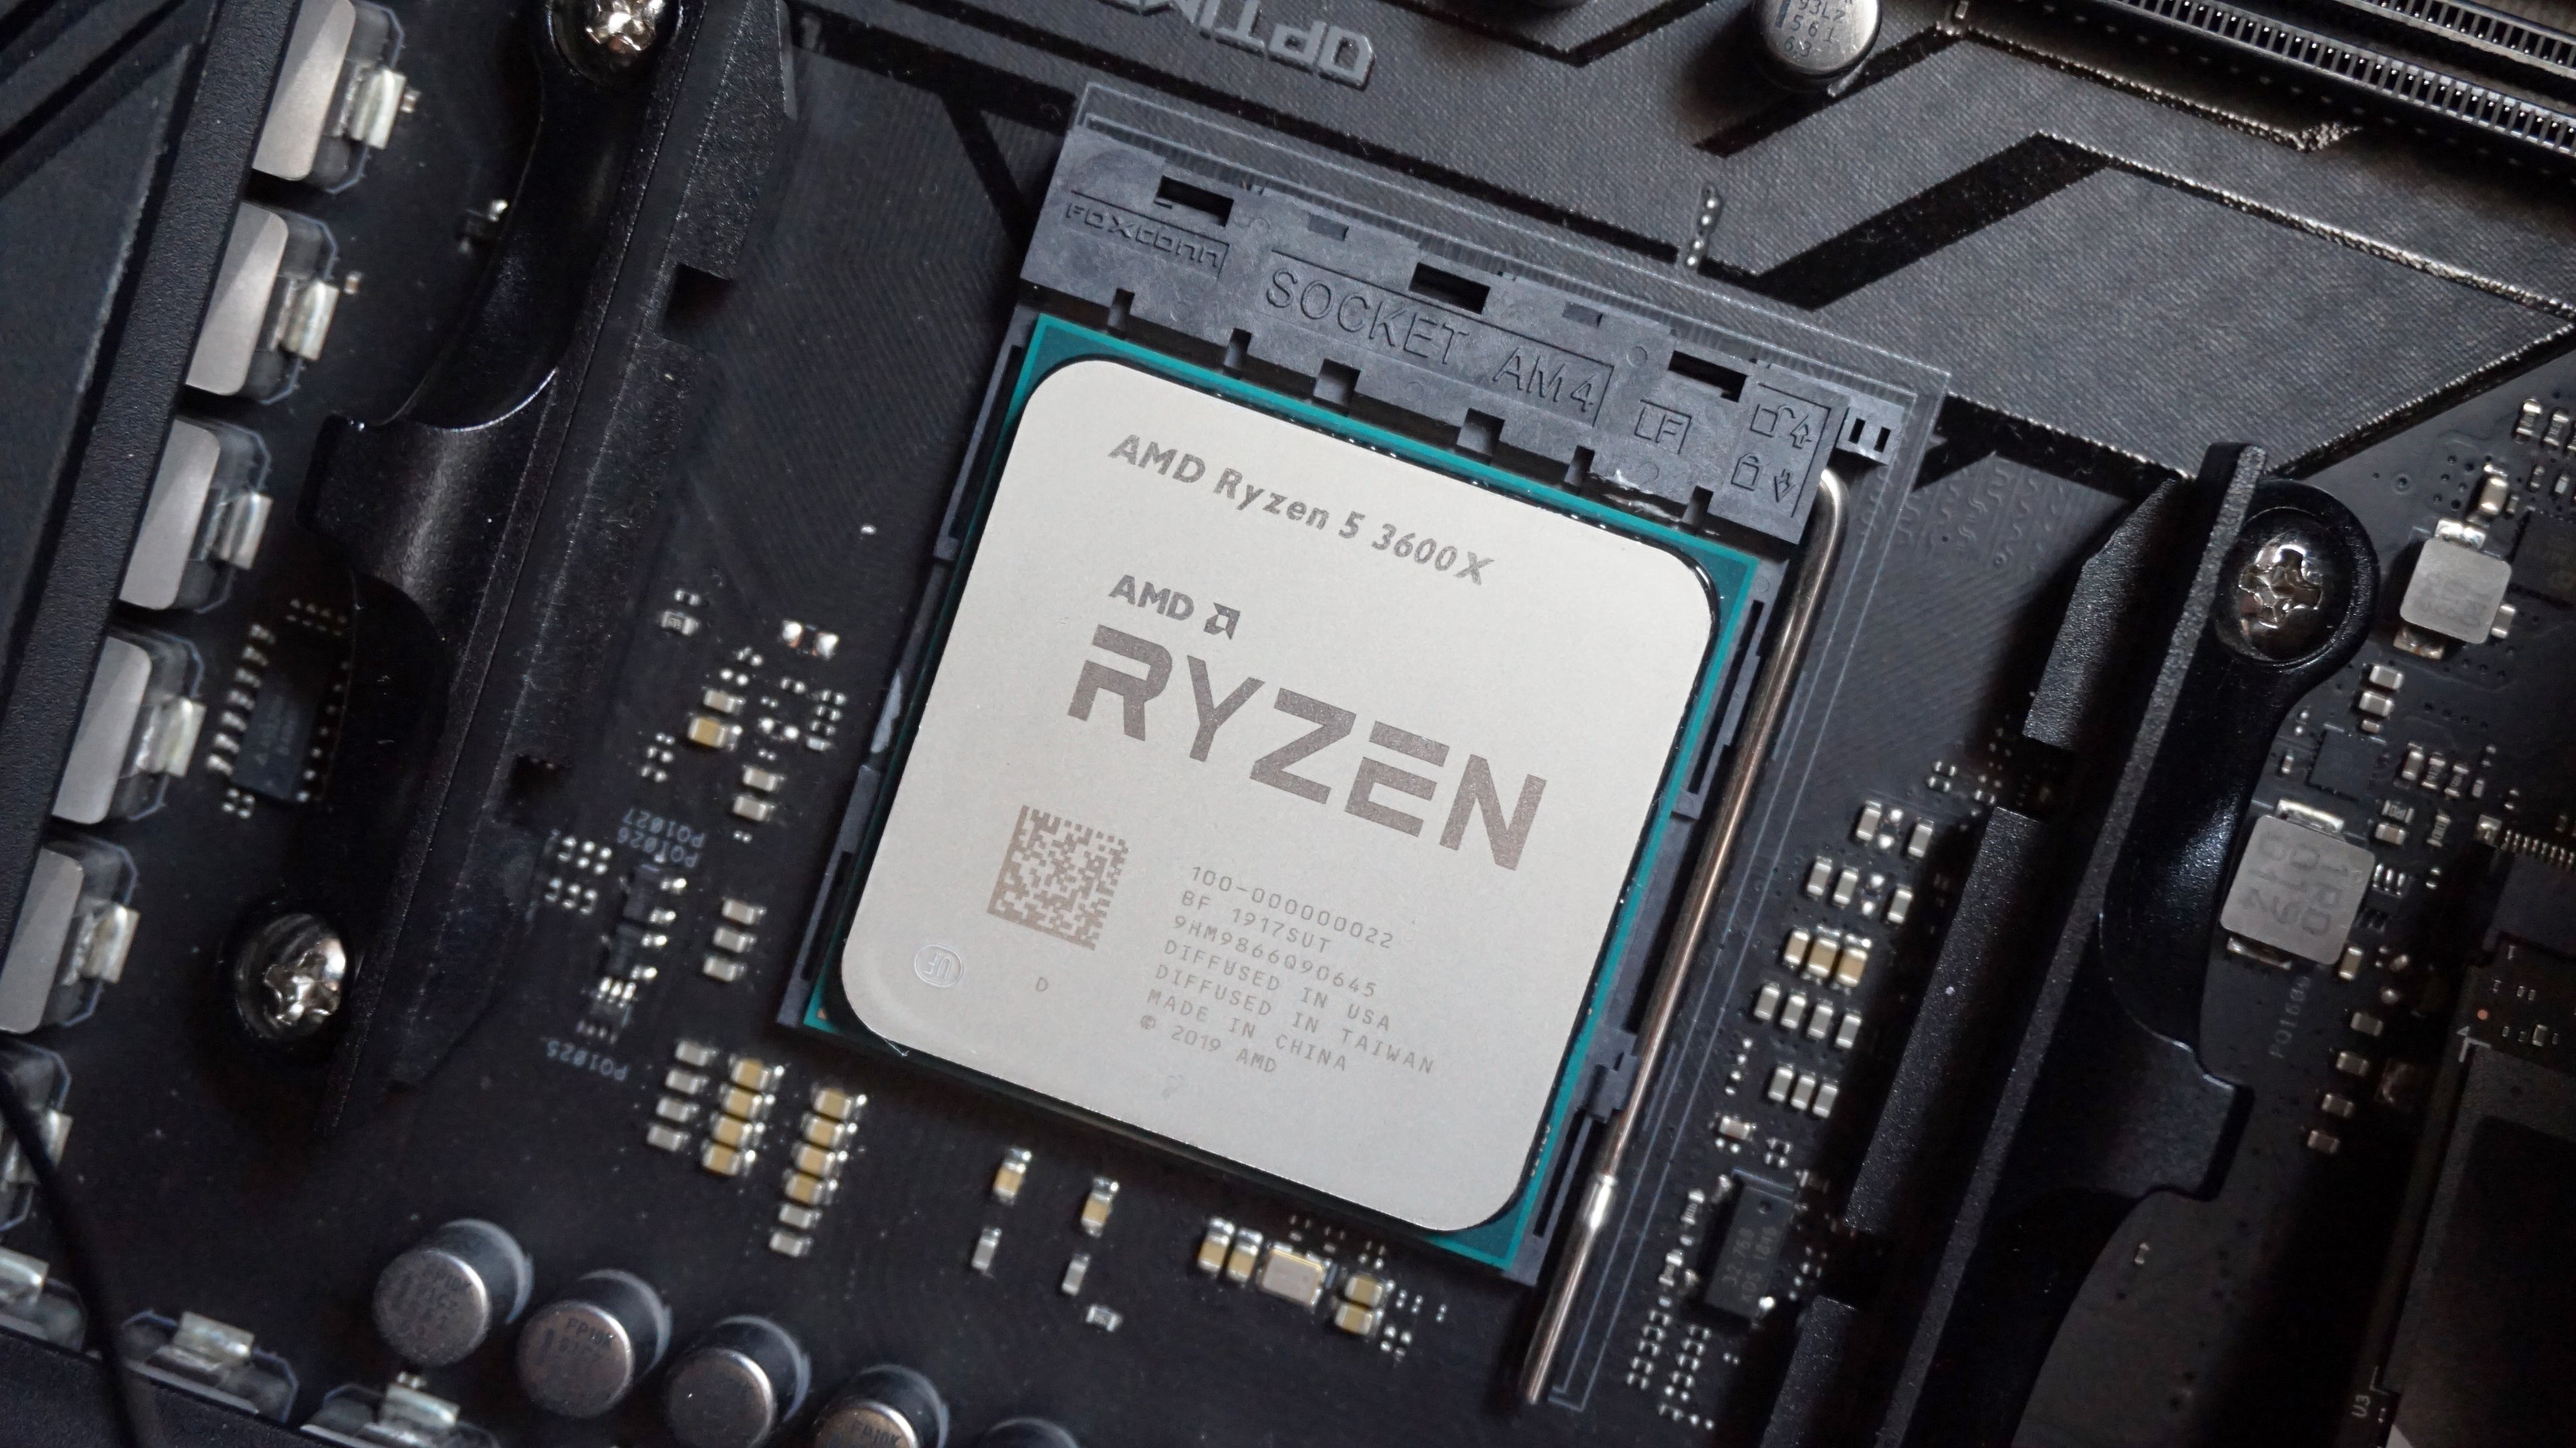 Ryzen x6. Ryzen 5 3600x. AMD Ryzen 5 3600. Процессор AMD Ryzen 5 3600x OEM. AMD Ryzen 5 3600 am4, 6 x 3600 МГЦ.